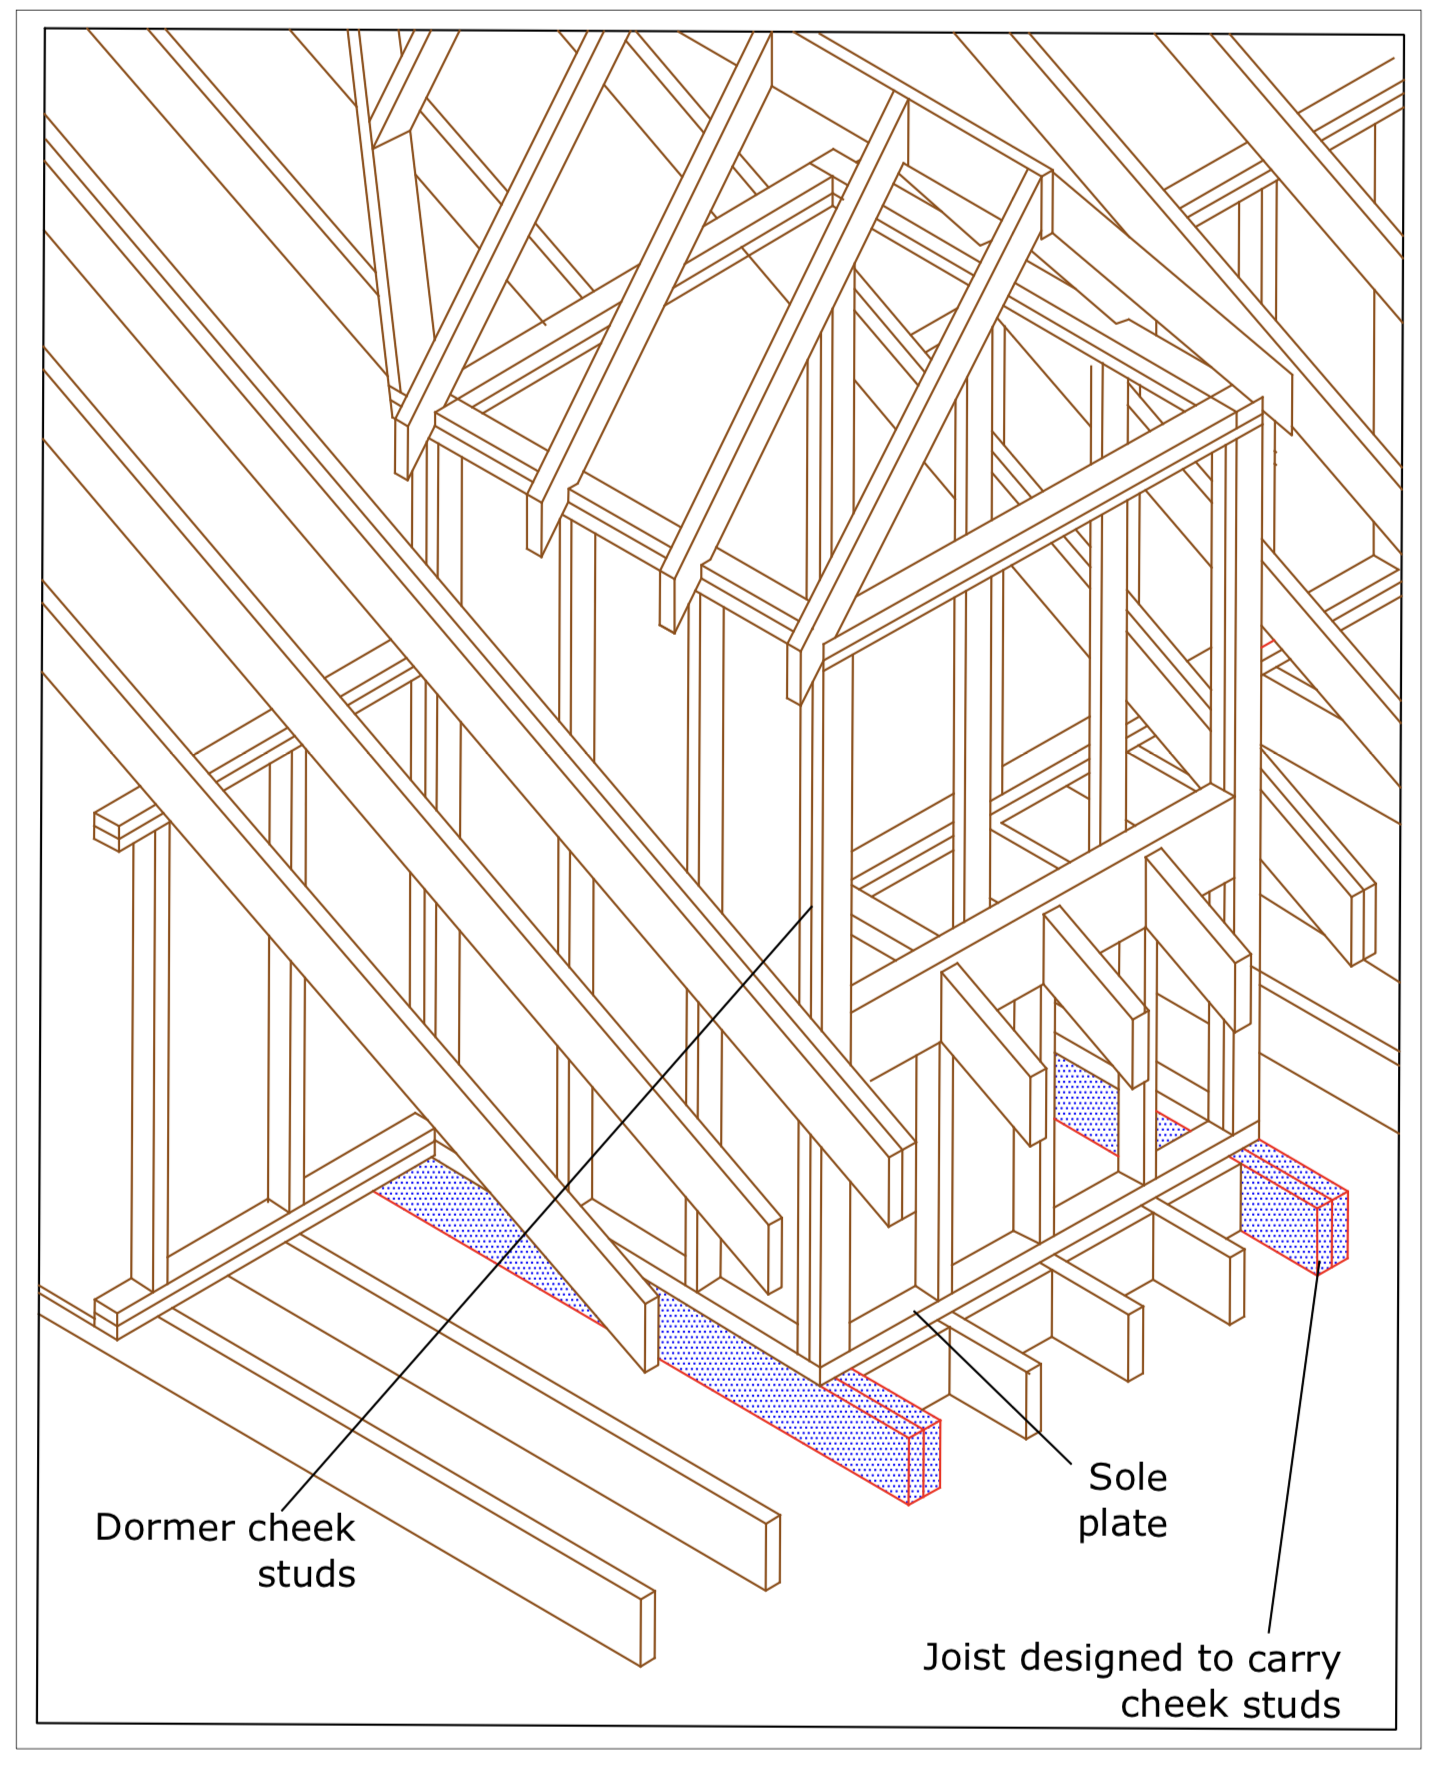 Diagram D52 - Typical dormer window construction